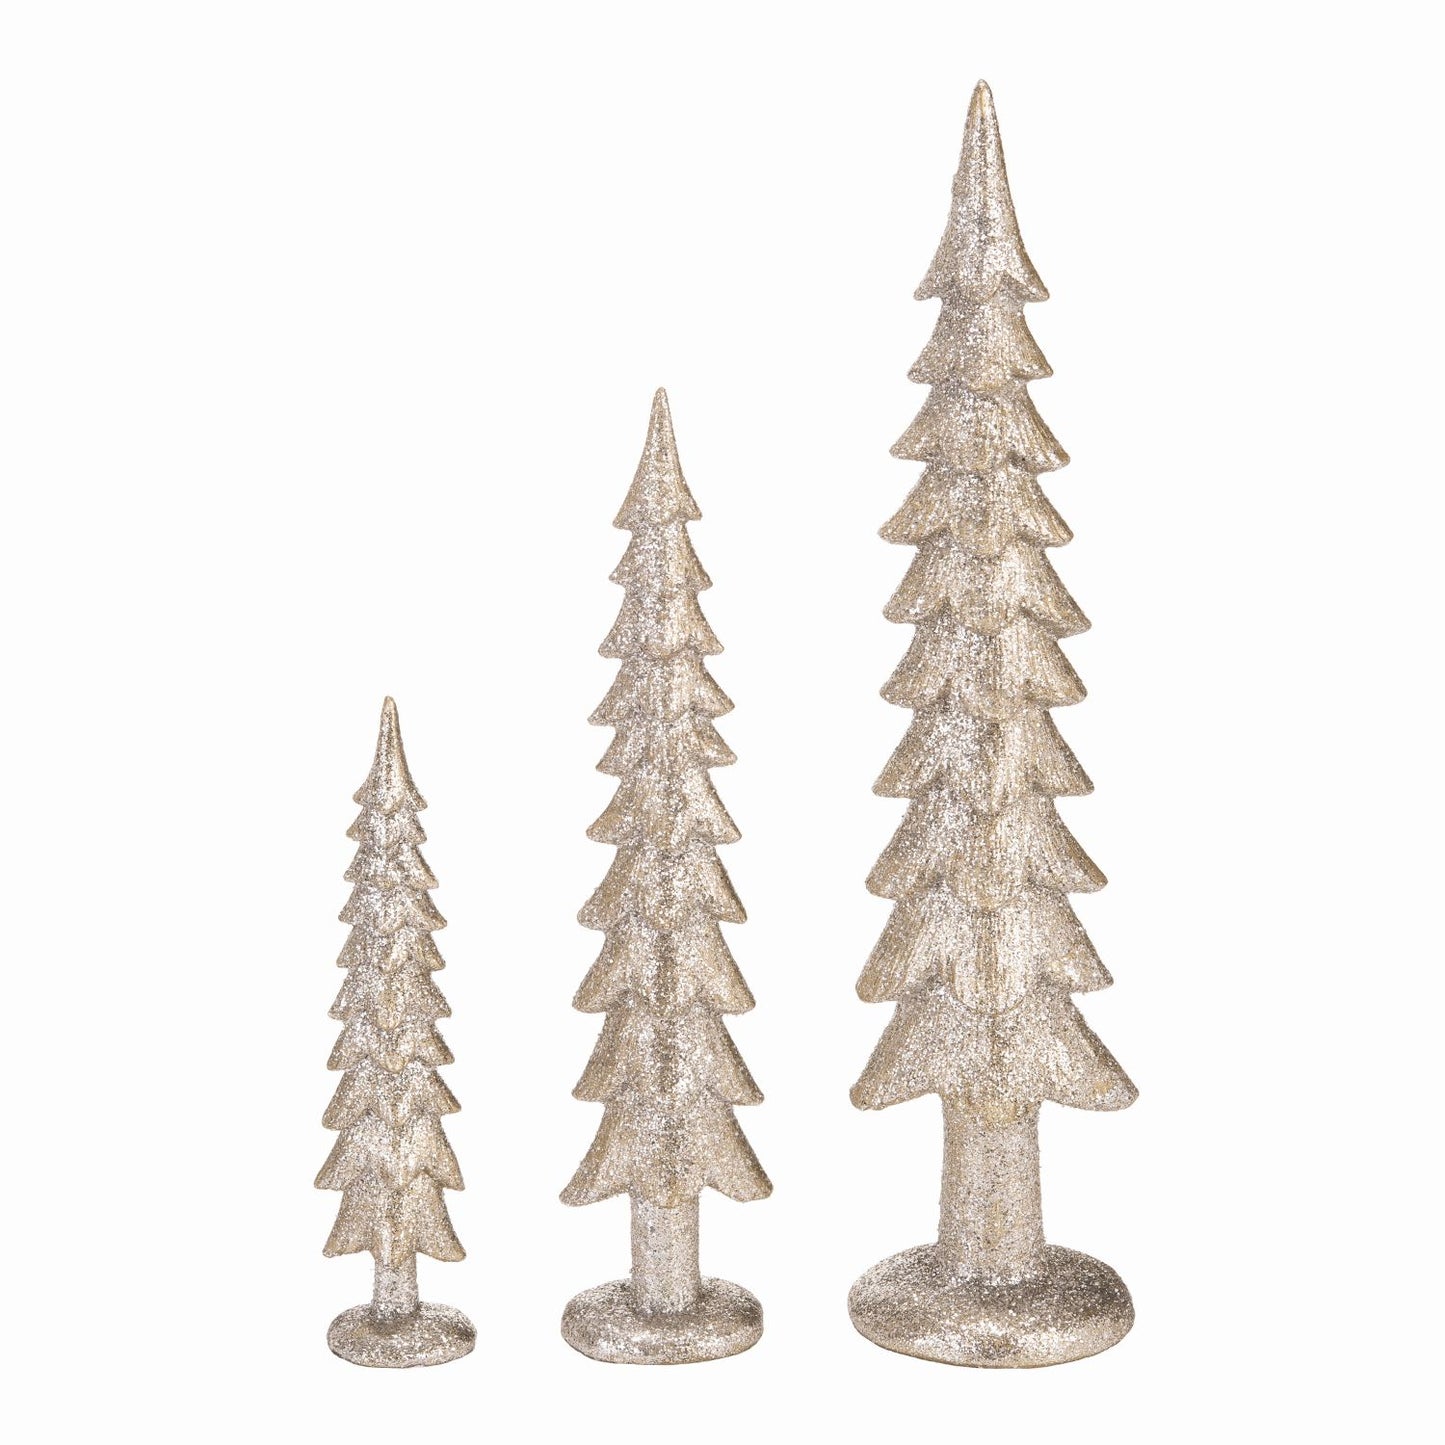 Transpac Resin Glitter Elegance Christmas Tree, Set Of 3